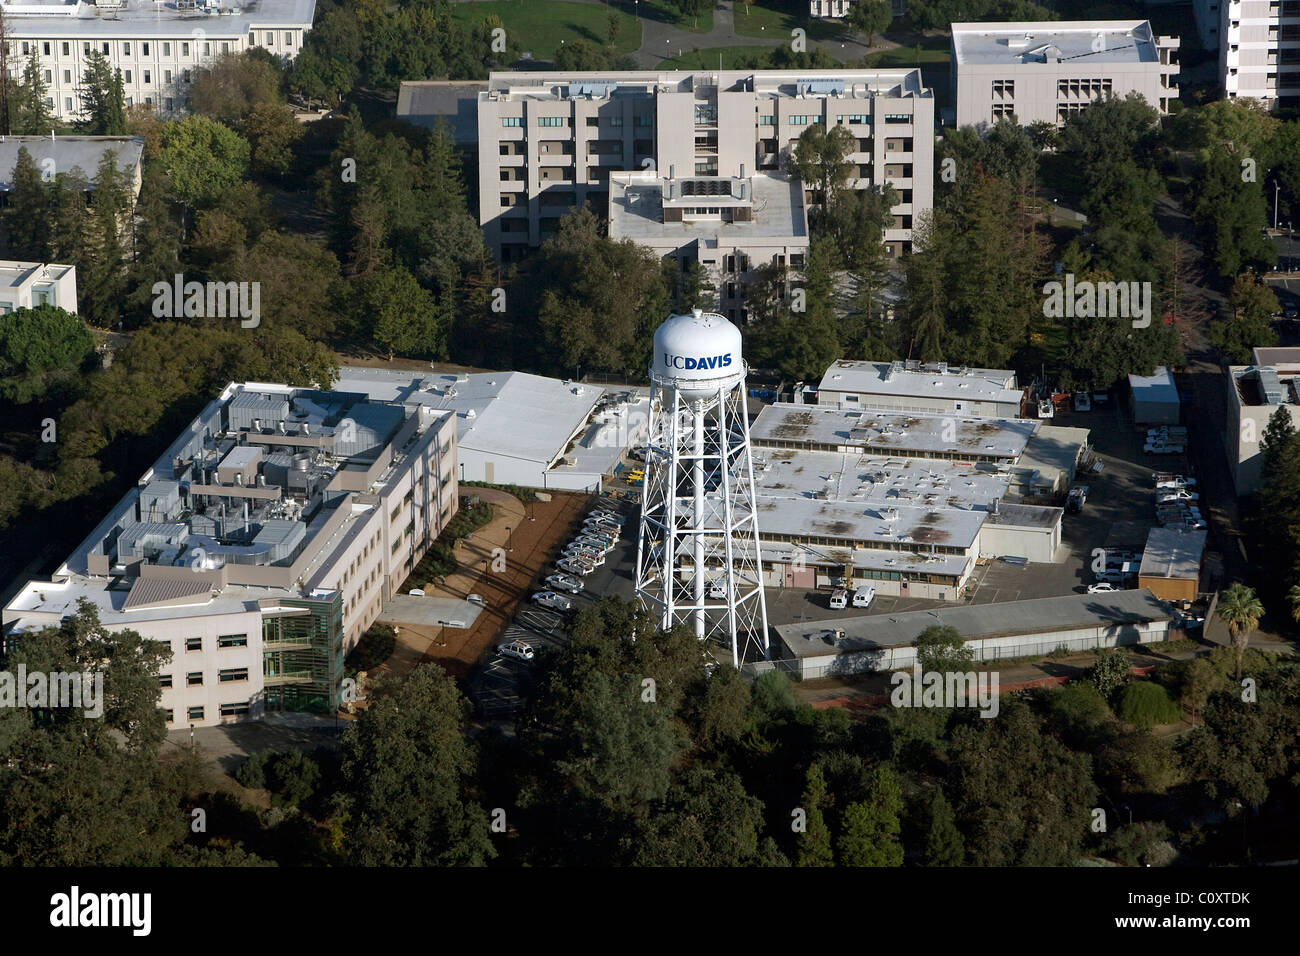 Luftaufnahme über dem Campus Wasserturm University of California Davis Stockfoto